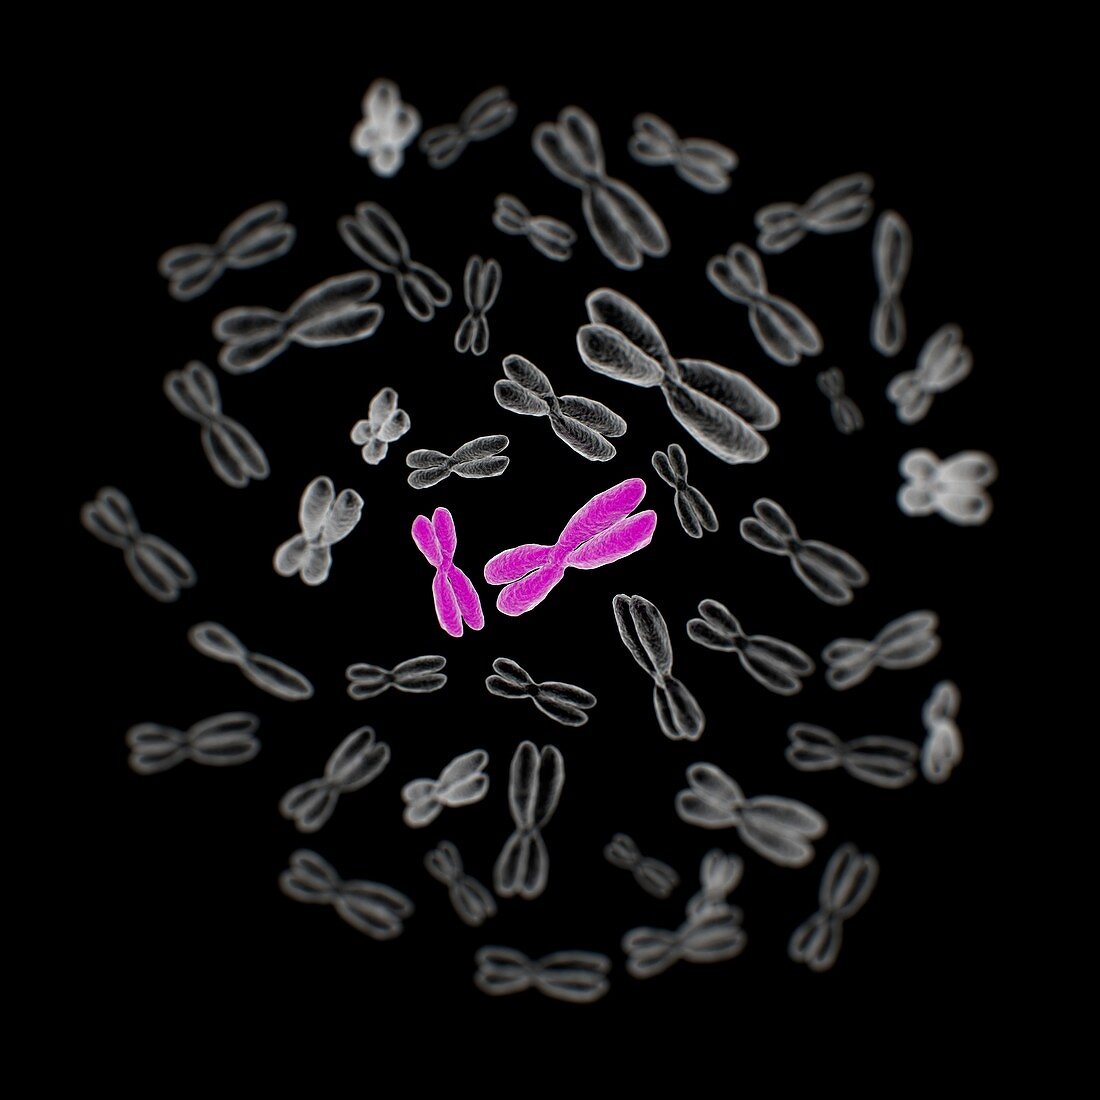 Set of human chromosomes, illustration